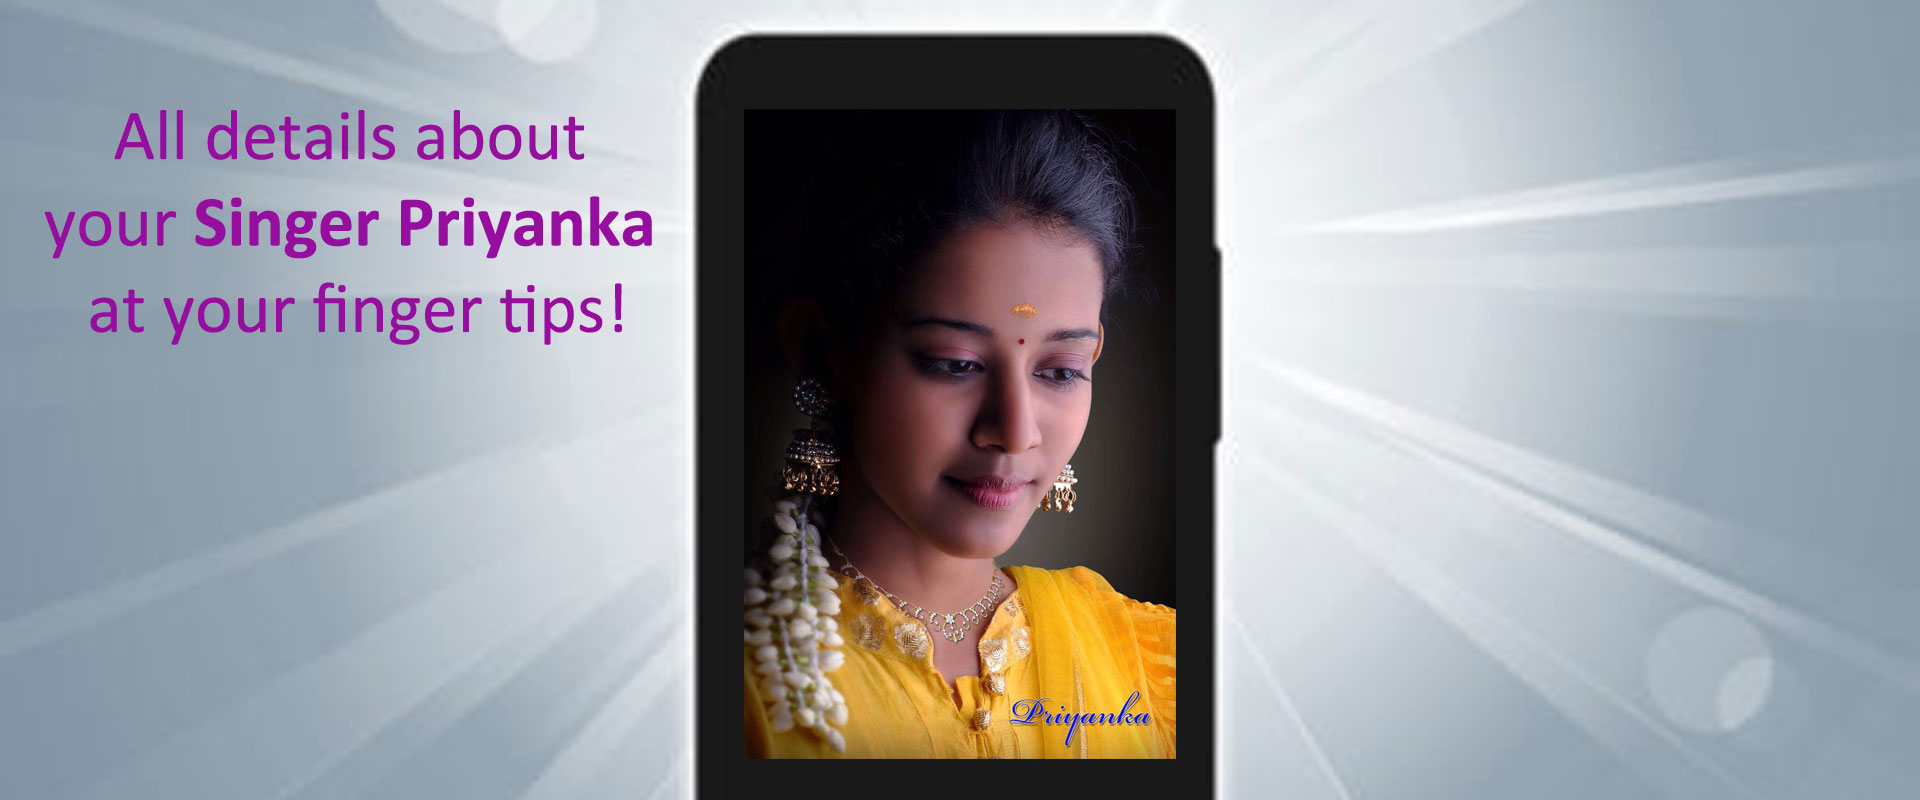 Launching... www.singerpriyanka.com - All details about your singer Priyanka at your finger tips!